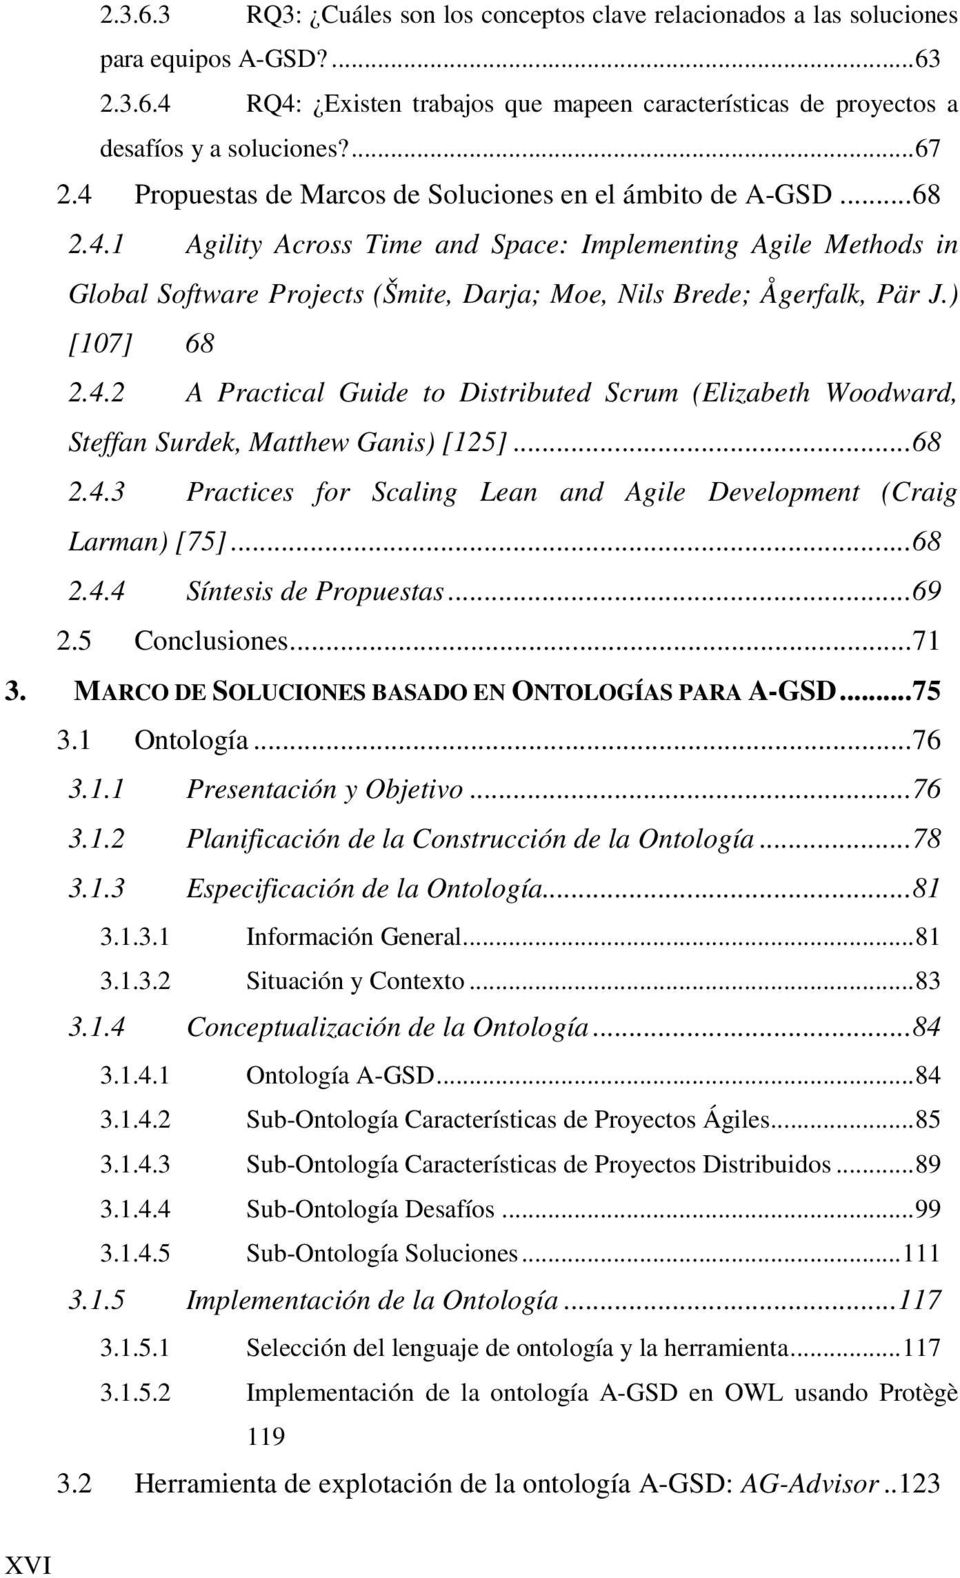 ) [107] 68 2.4.2 A Practical Guide to Distributed Scrum (Elizabeth Woodward, Steffan Surdek, Matthew Ganis) [125]...68 2.4.3 Practices for Scaling Lean and Agile Development (Craig Larman) [75]...68 2.4.4 Síntesis de Propuestas.